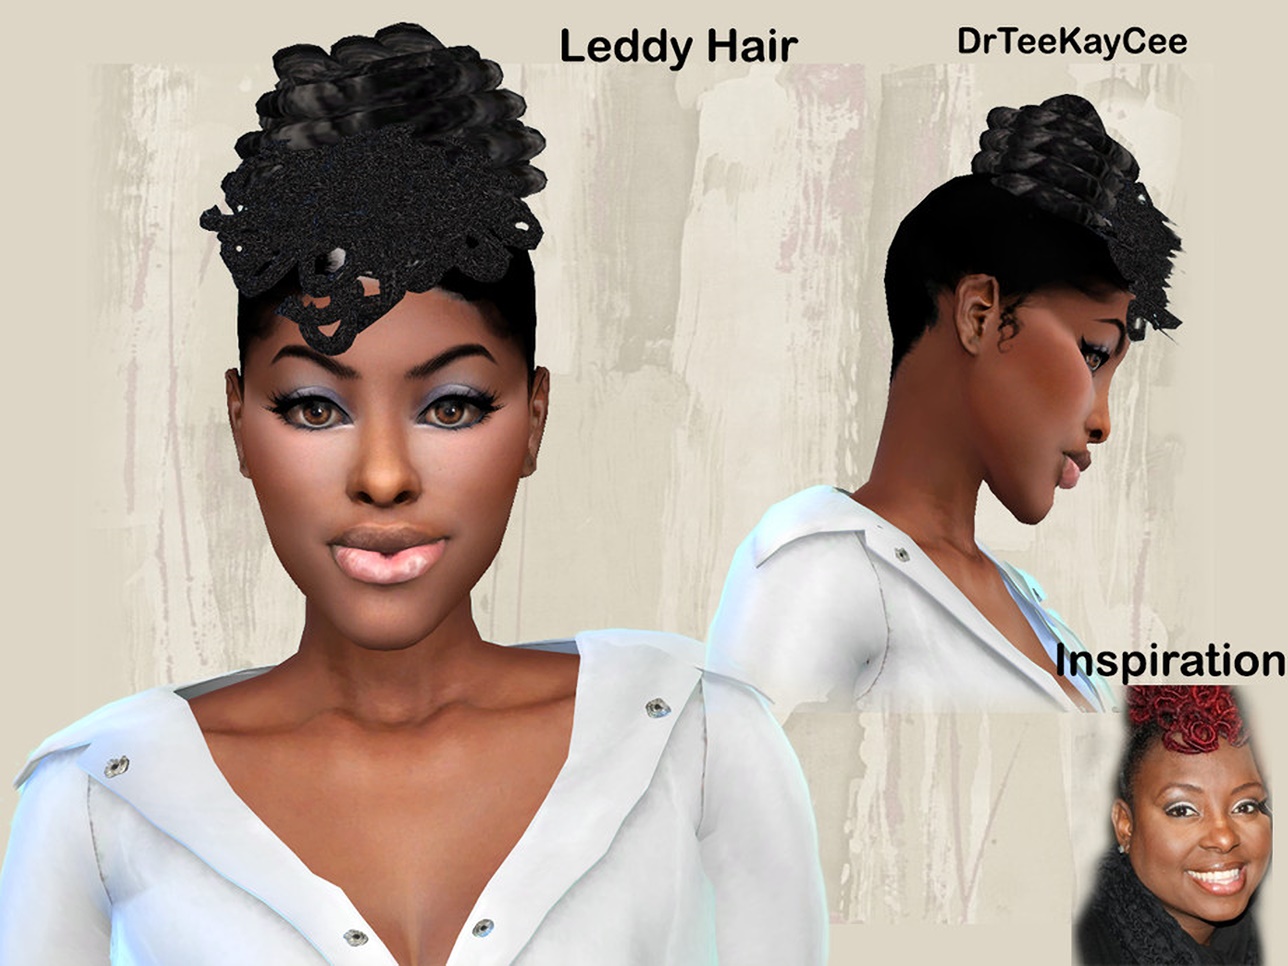 Leddy Updo Hair By Drteekaycee At Tsr Sims 4 Updates 5895